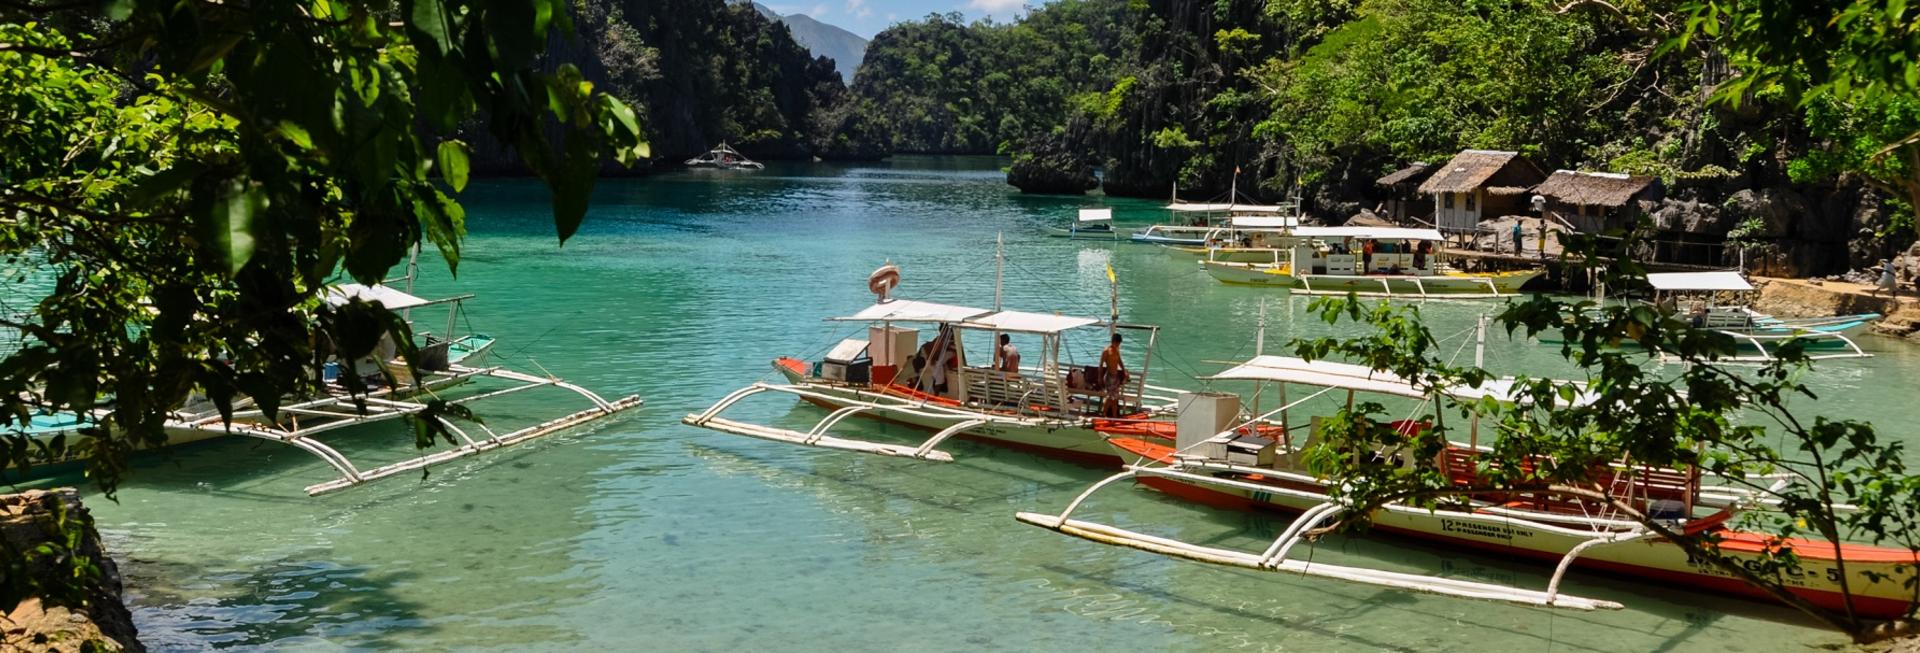 Boats, Coron, Palawan, the Philippines